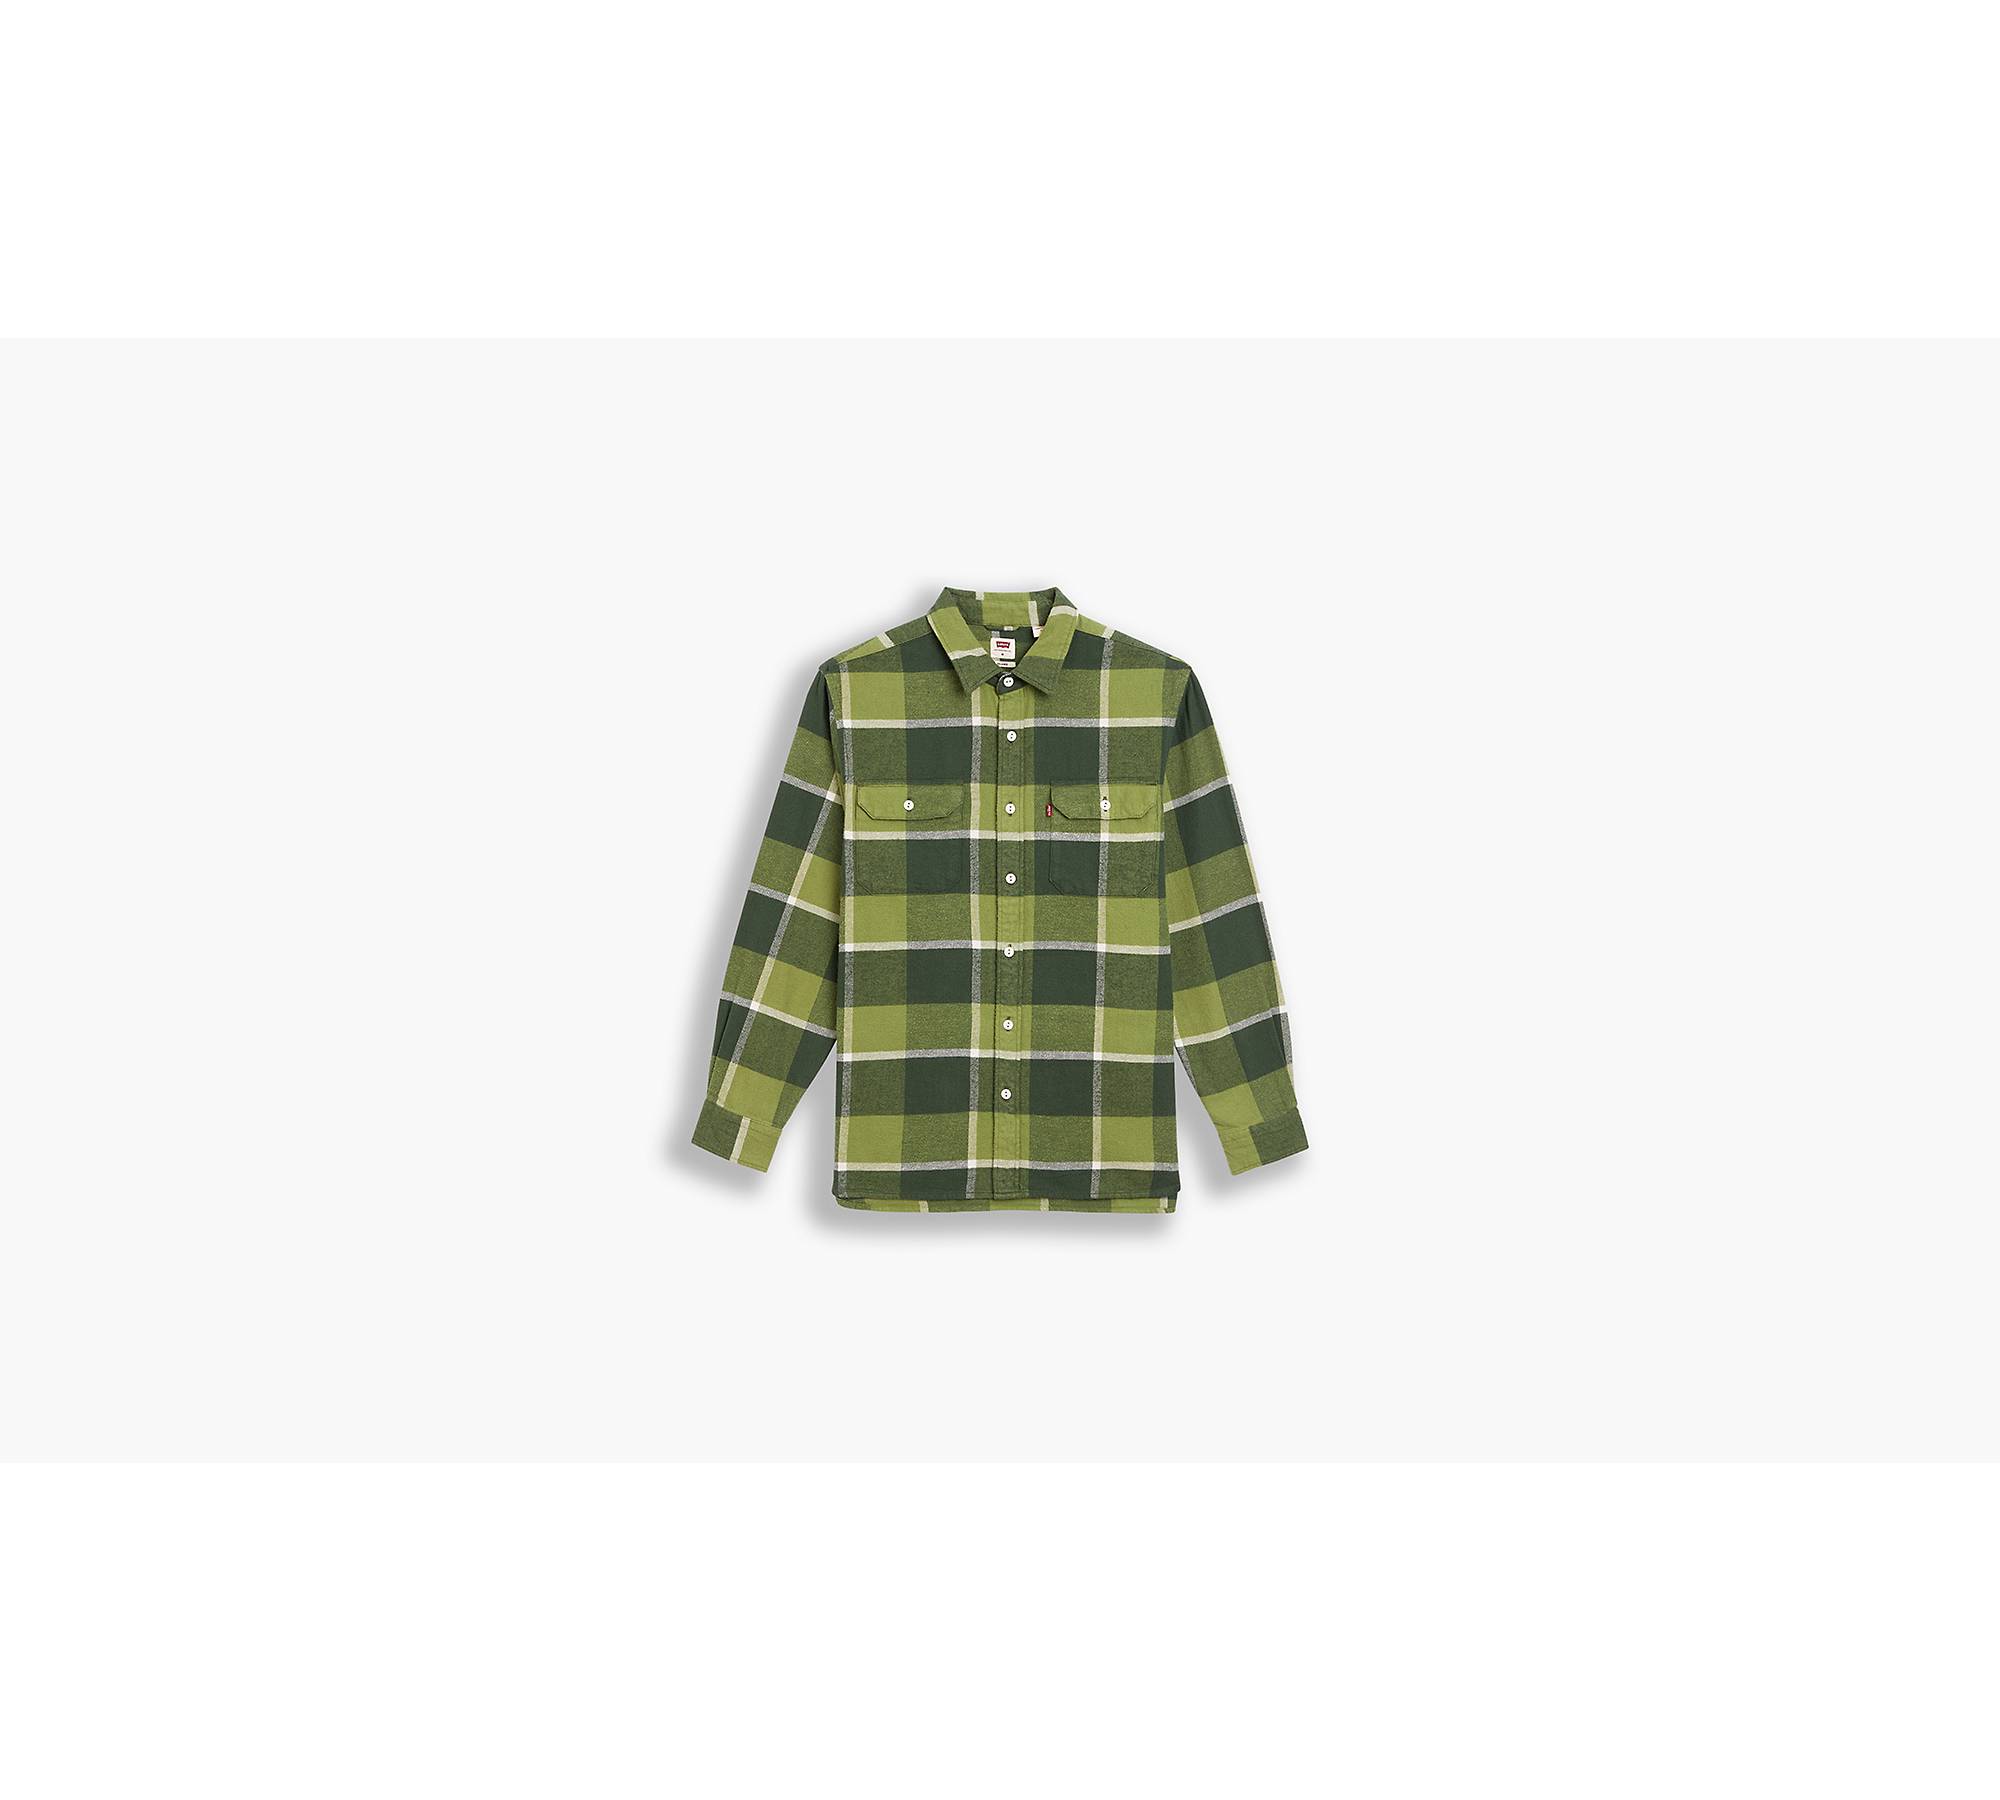 Jackson Worker Flannel Overshirt - Green | Levi's® US